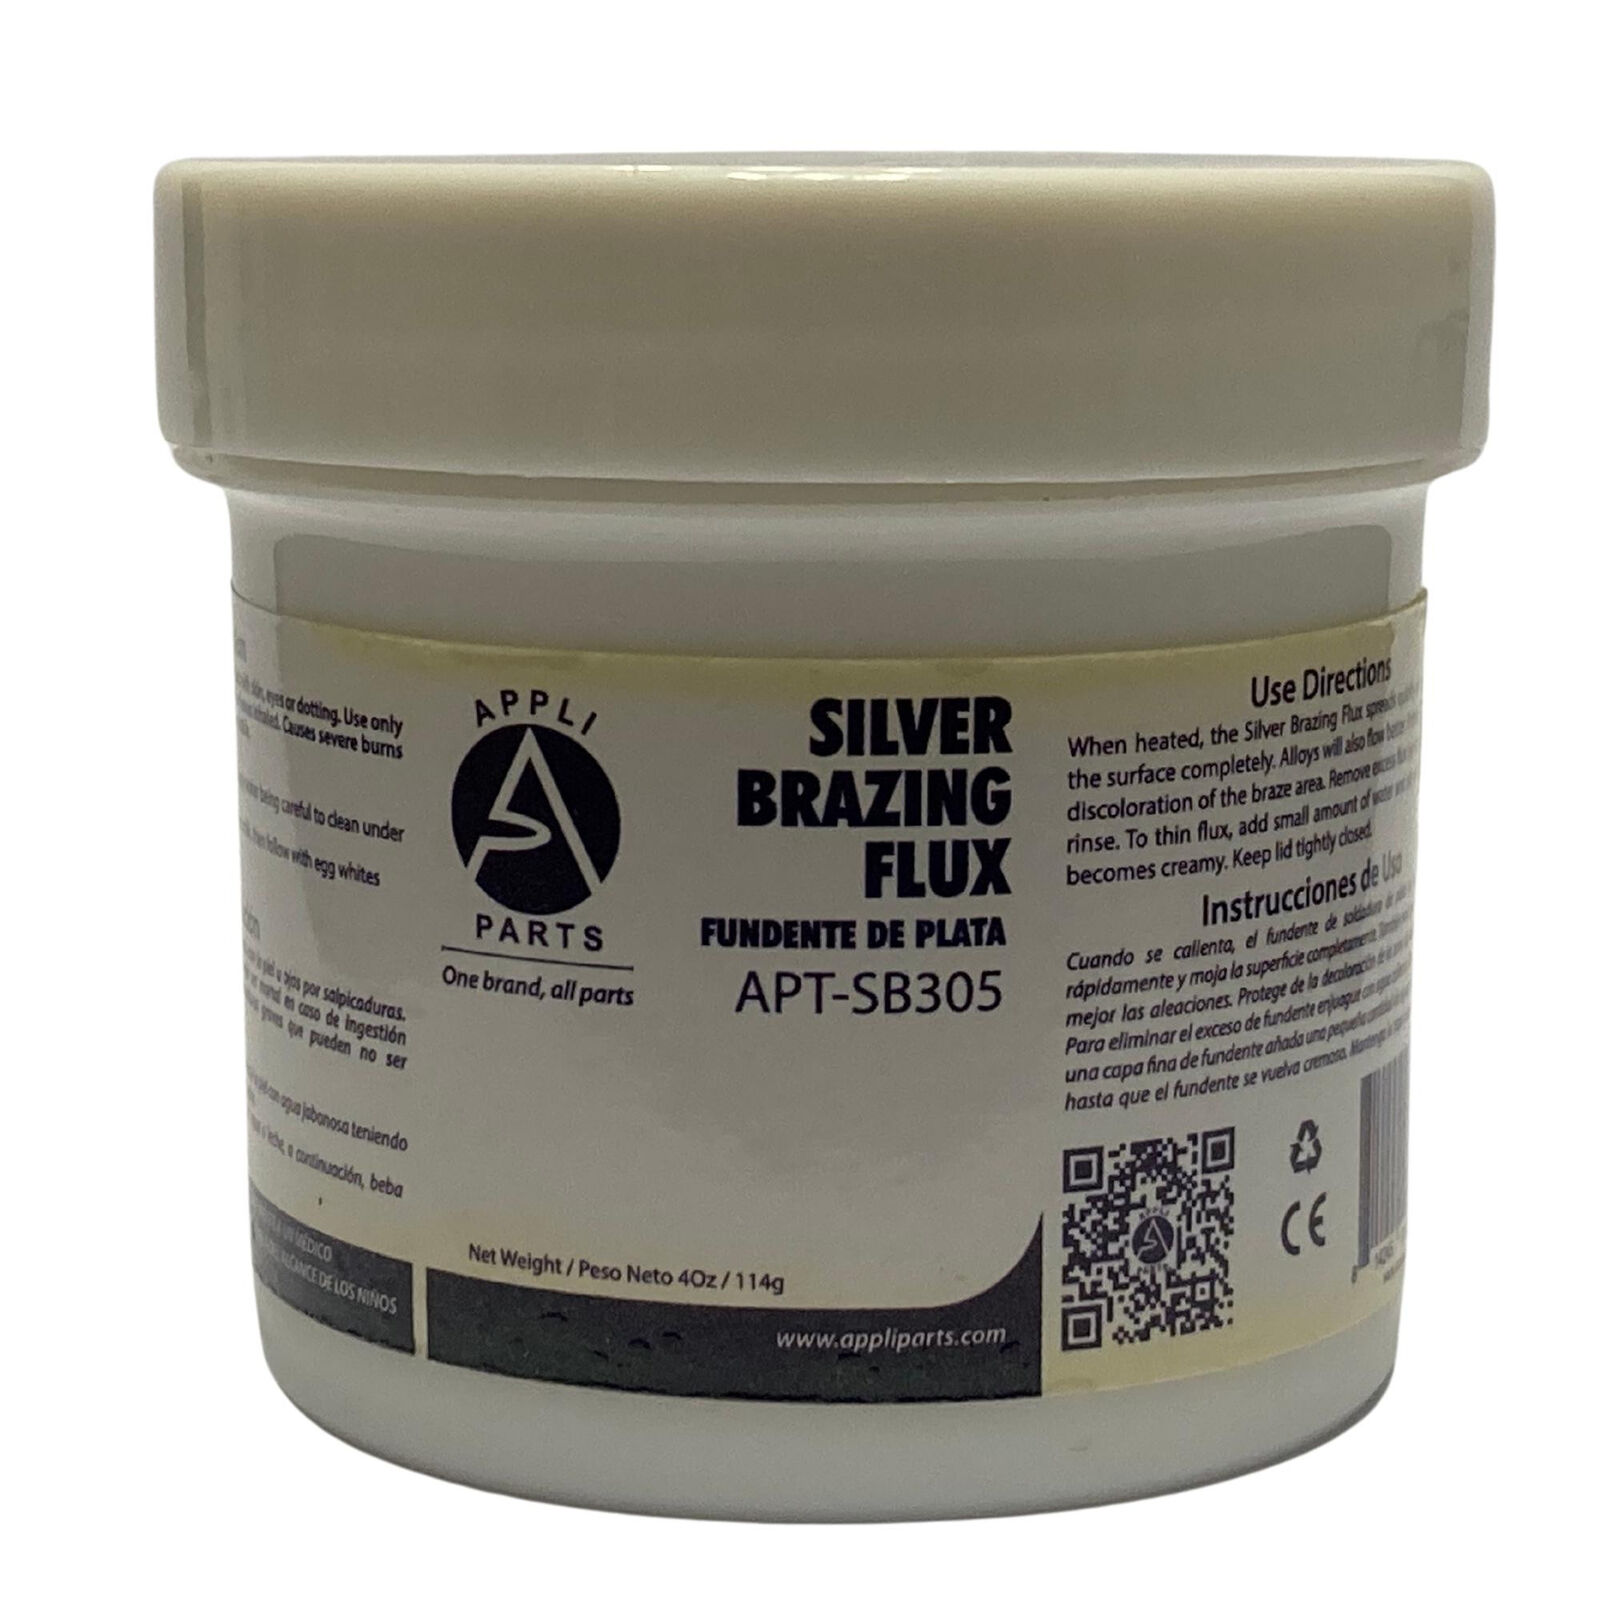 Appli Parts APT-SB305 4 Oz Silver Brazing Flux